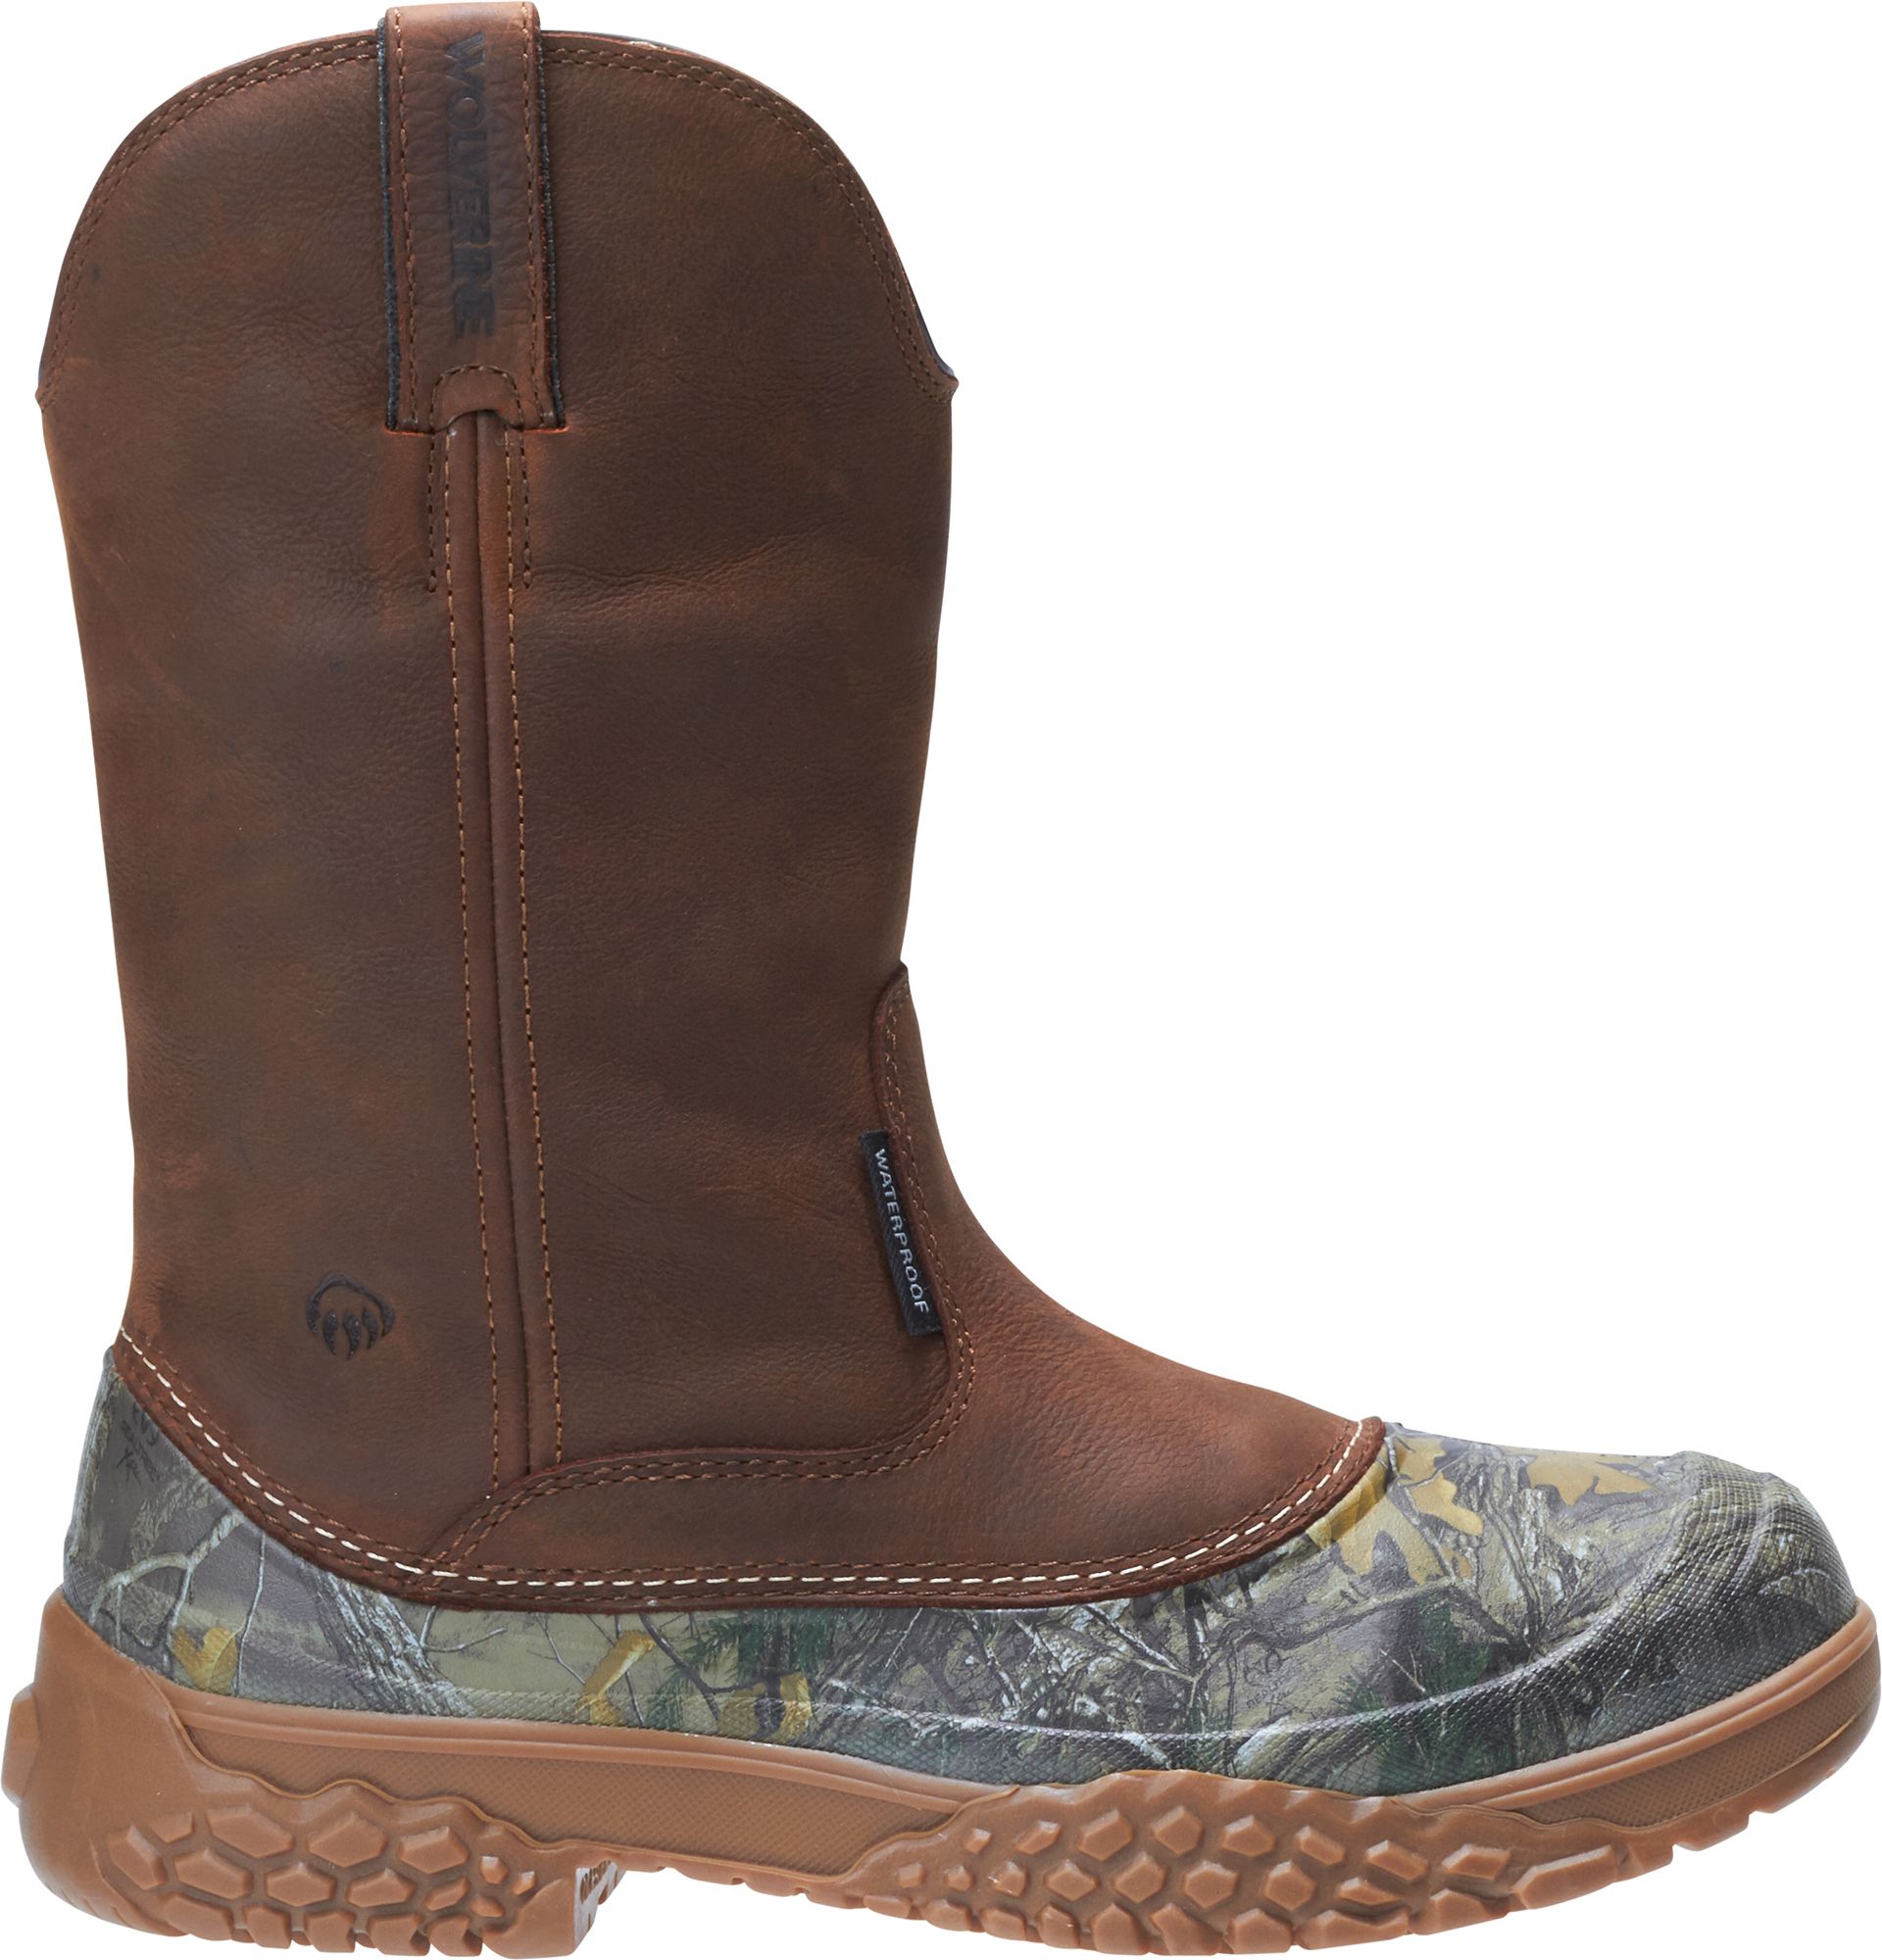 waterproof boots wolverine